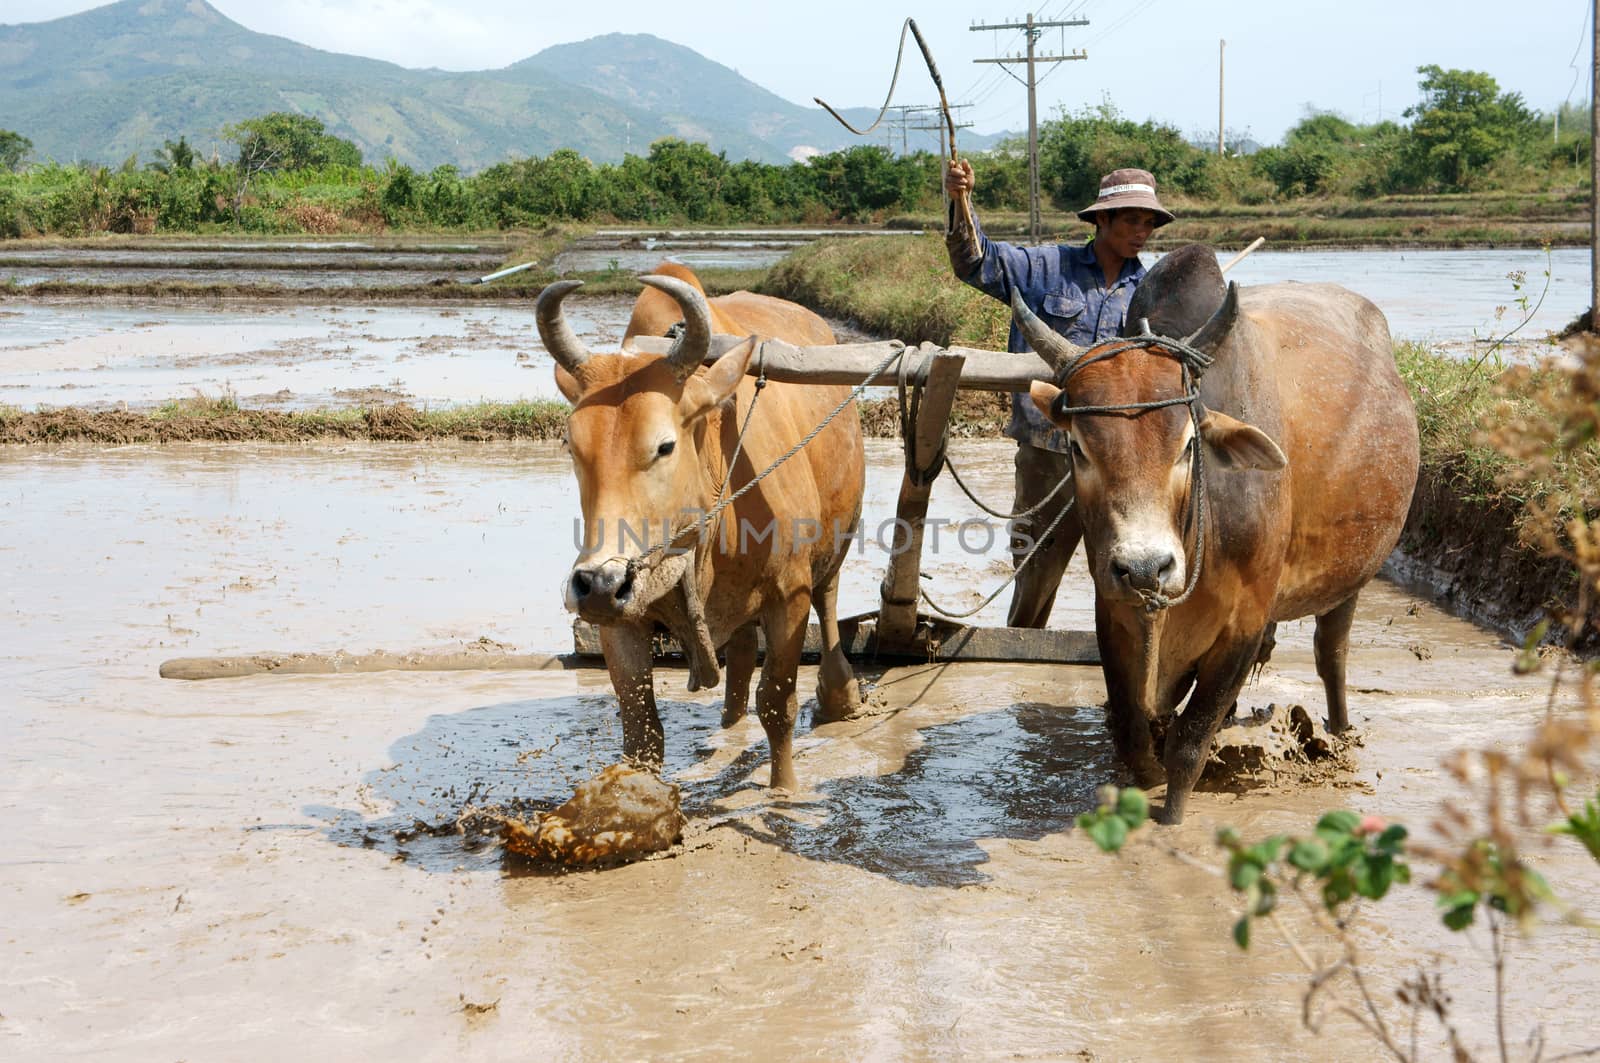  BINH THUAN, VIET NAM- FEBRUARY 4: Farmer with two buffalos ploughing on rice field, February 4, 2013 in Binh Thuan, Viet Nam     